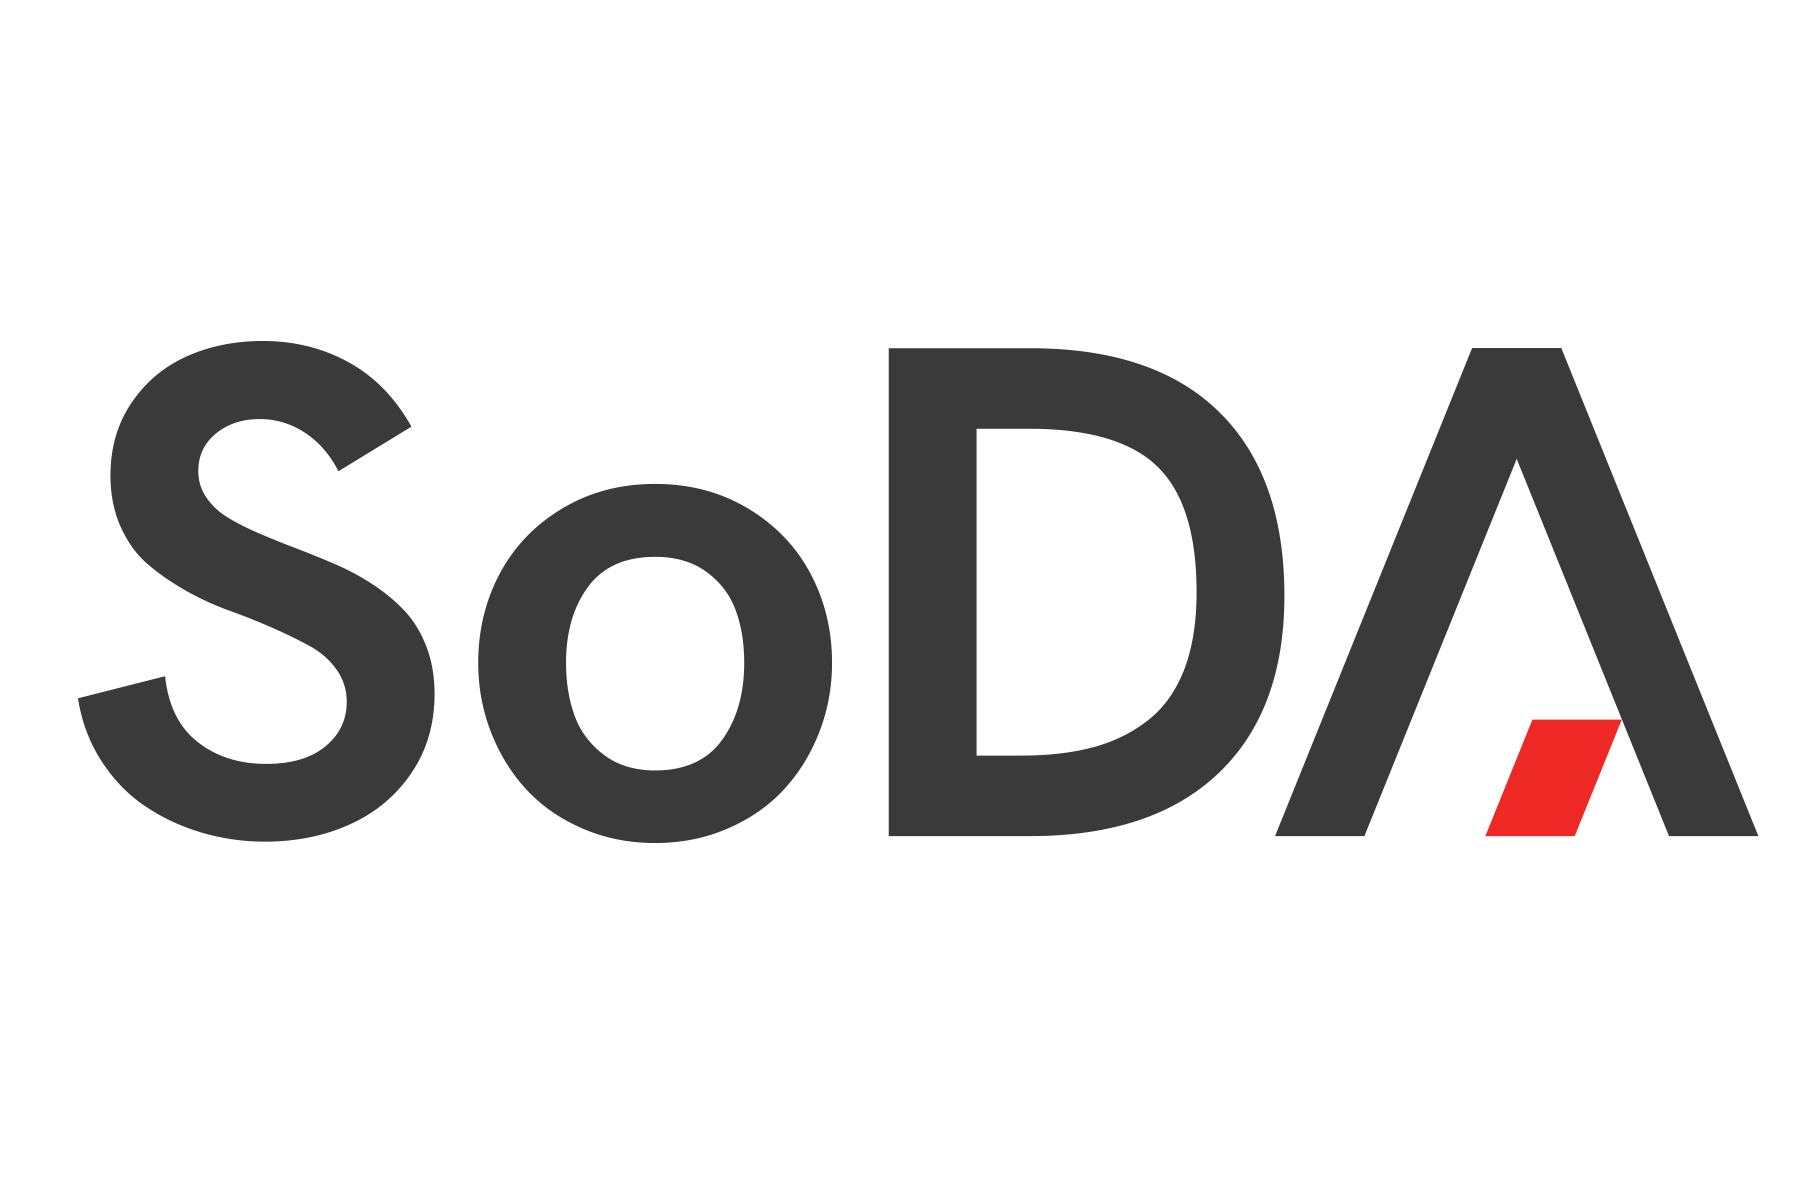 SODA logo